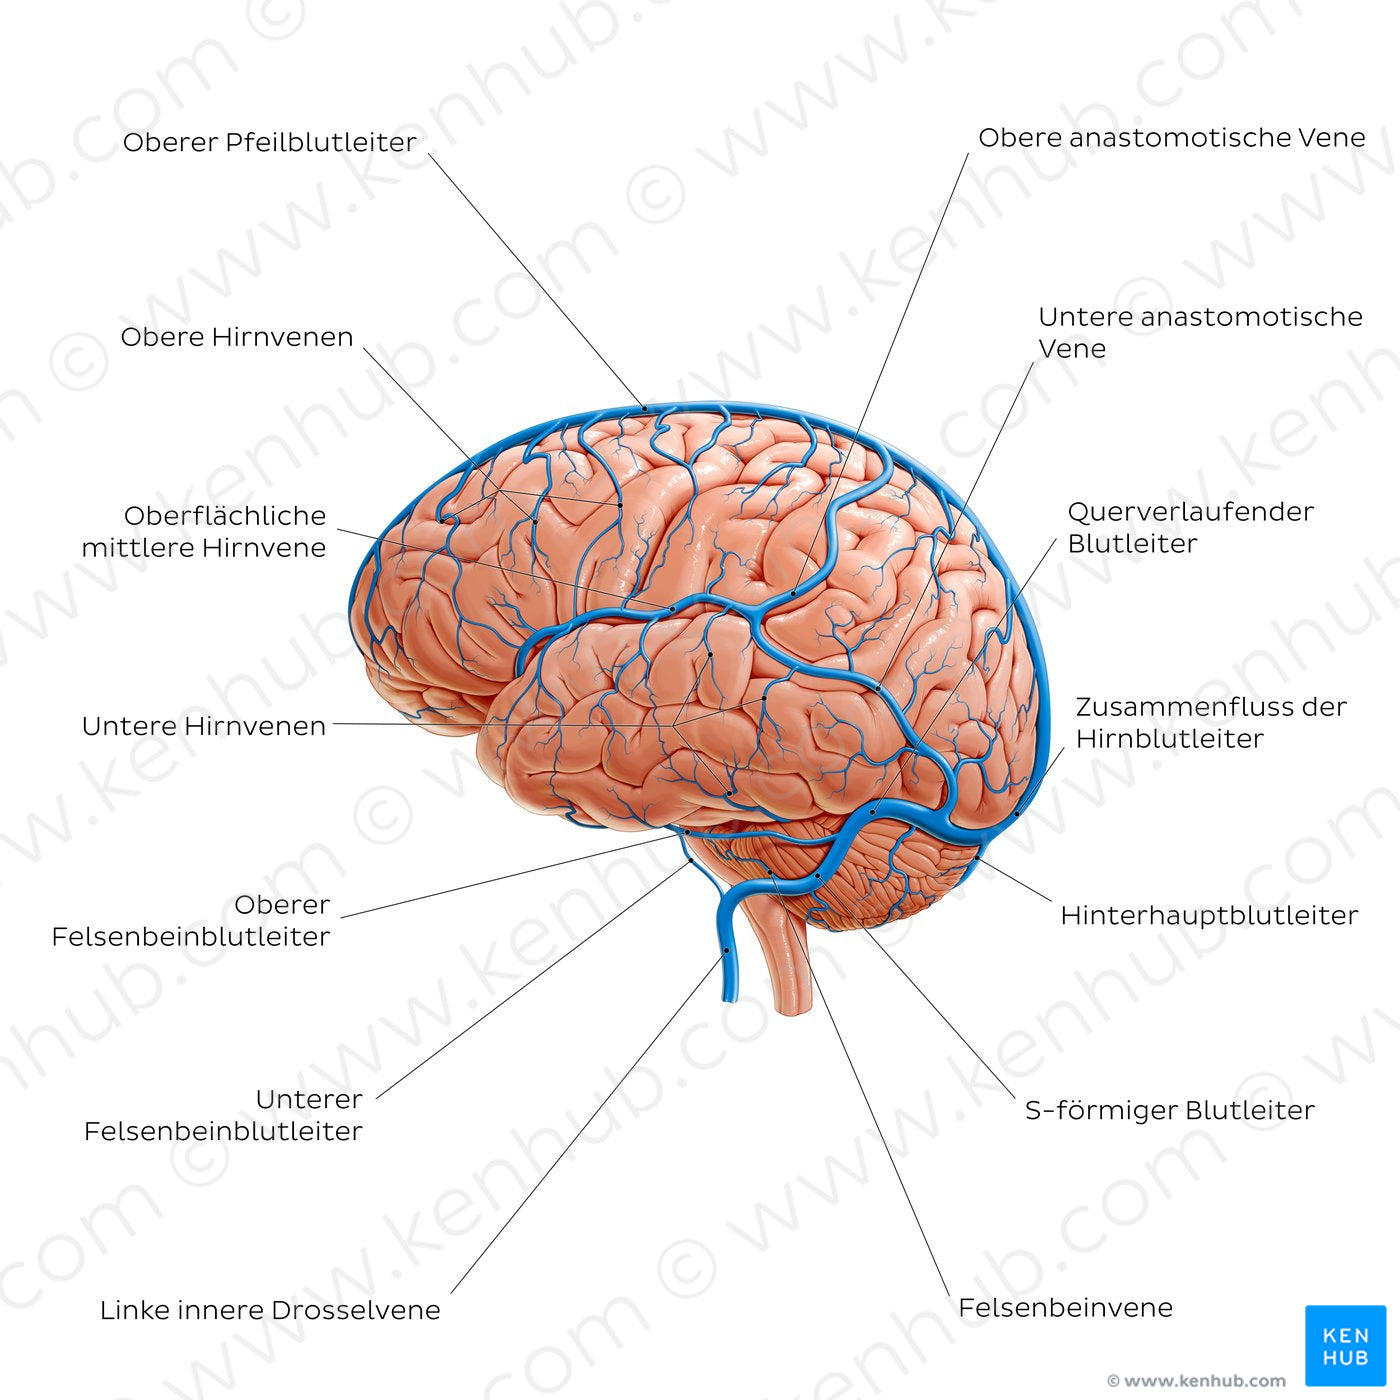 Cerebral veins - Lateral view (German)